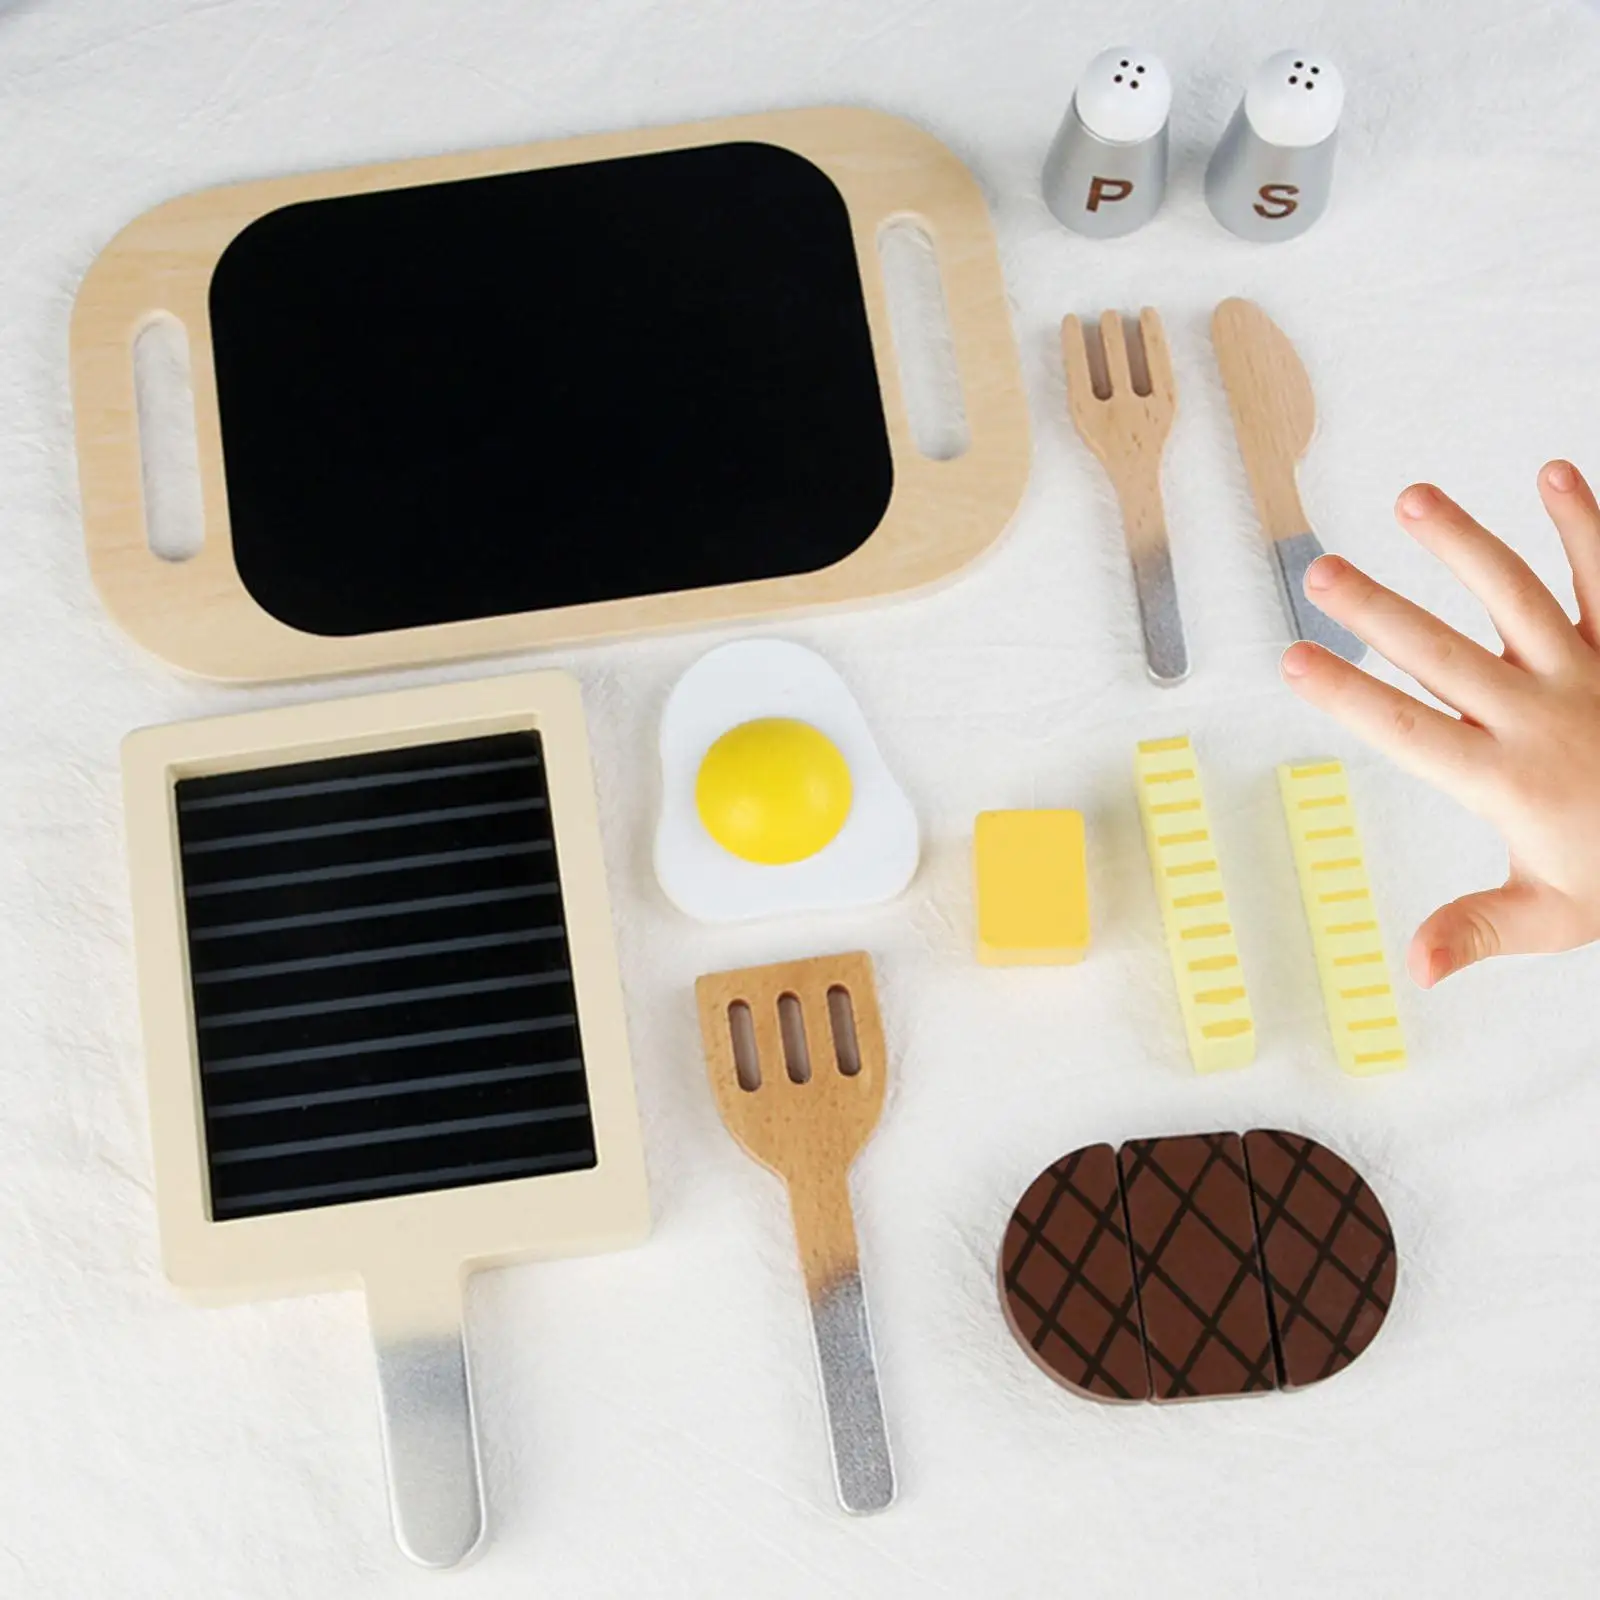 Wooden Play Kitchen Accessories Cookware Toy for Children Kids Birthday Gift